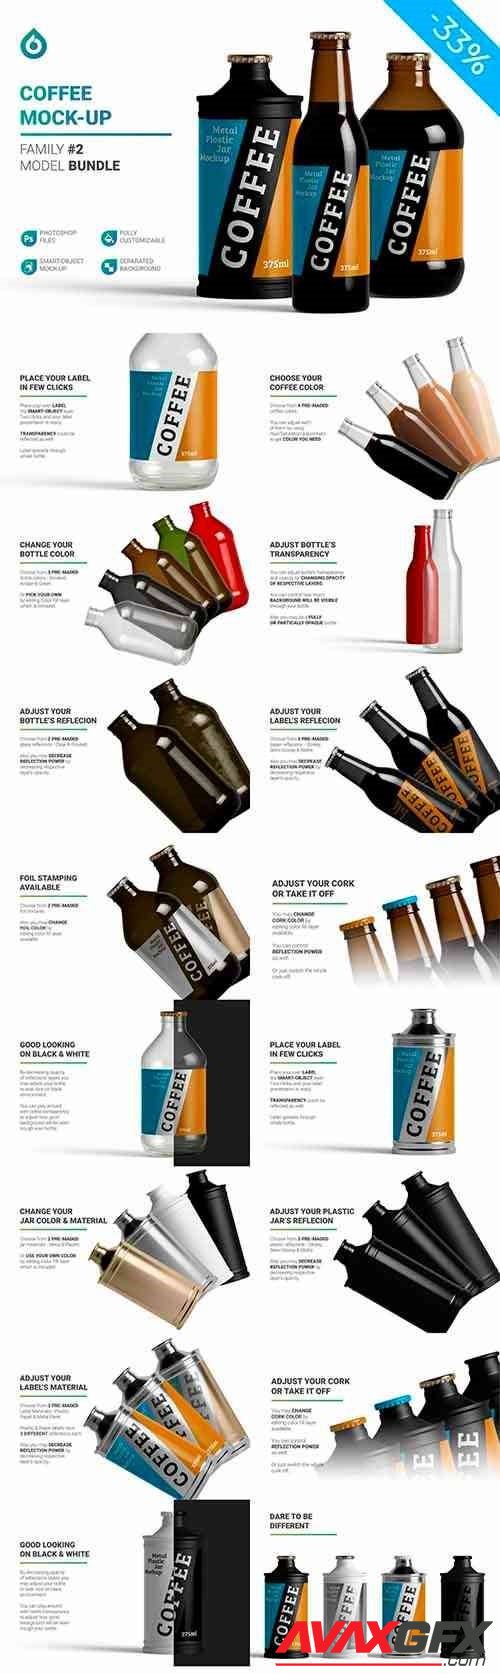 CreativeMarket - Coffee Bottle Jar Mockup 5755421